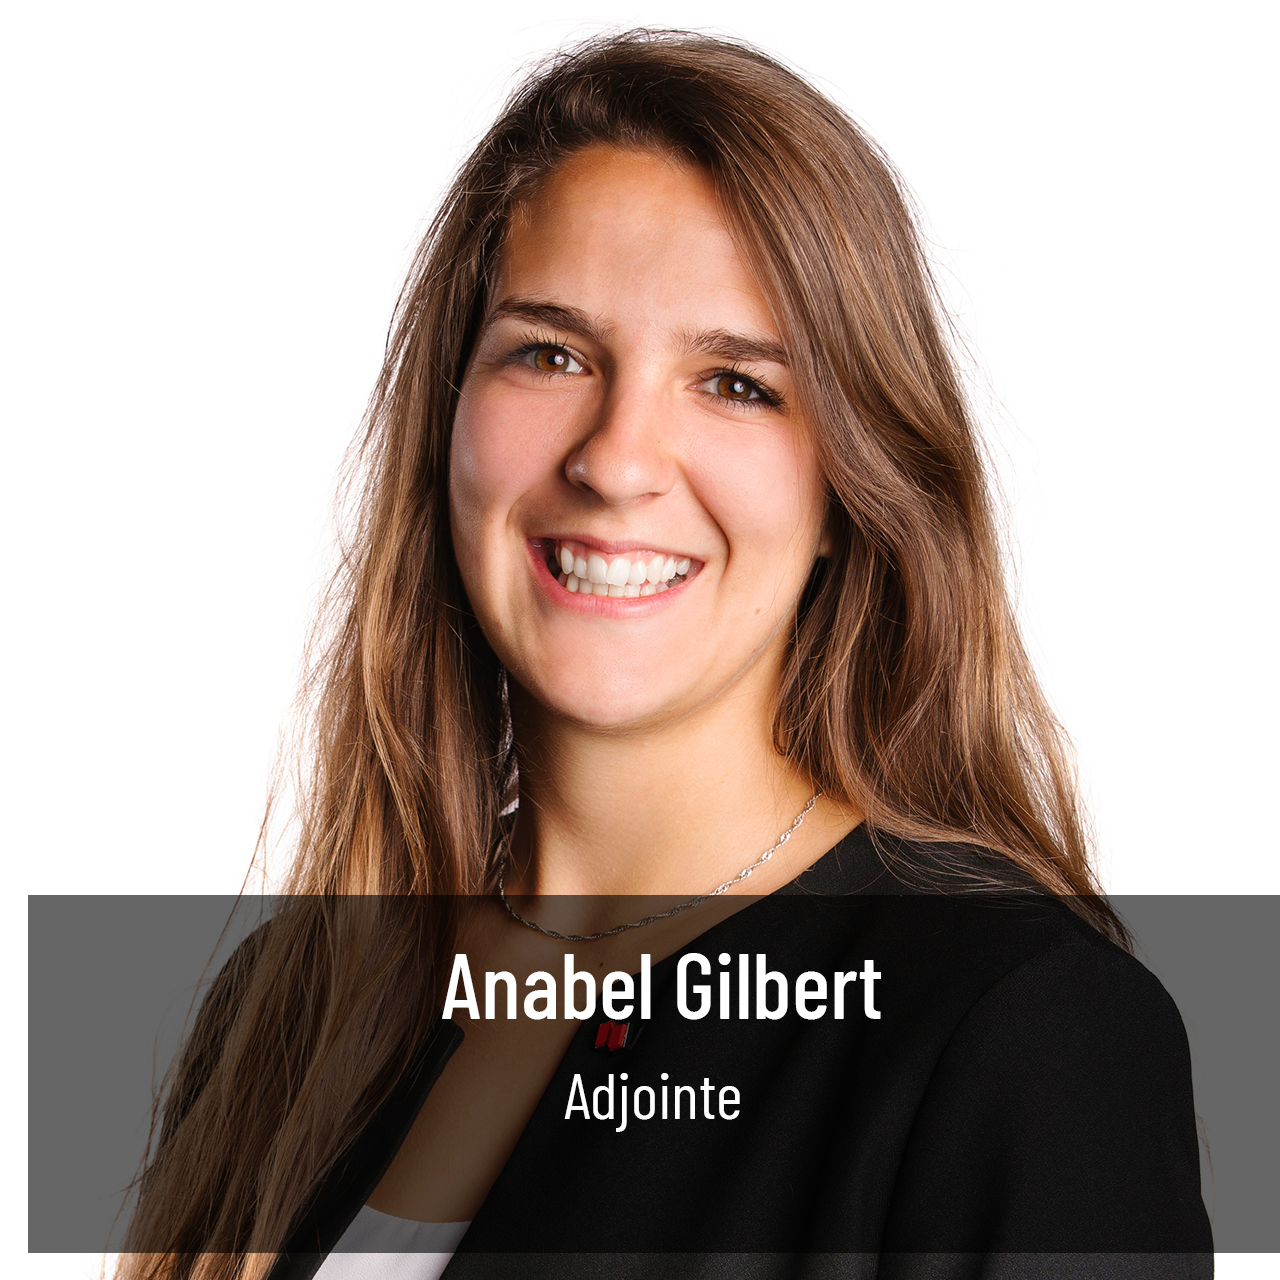 Anabel Gilbert